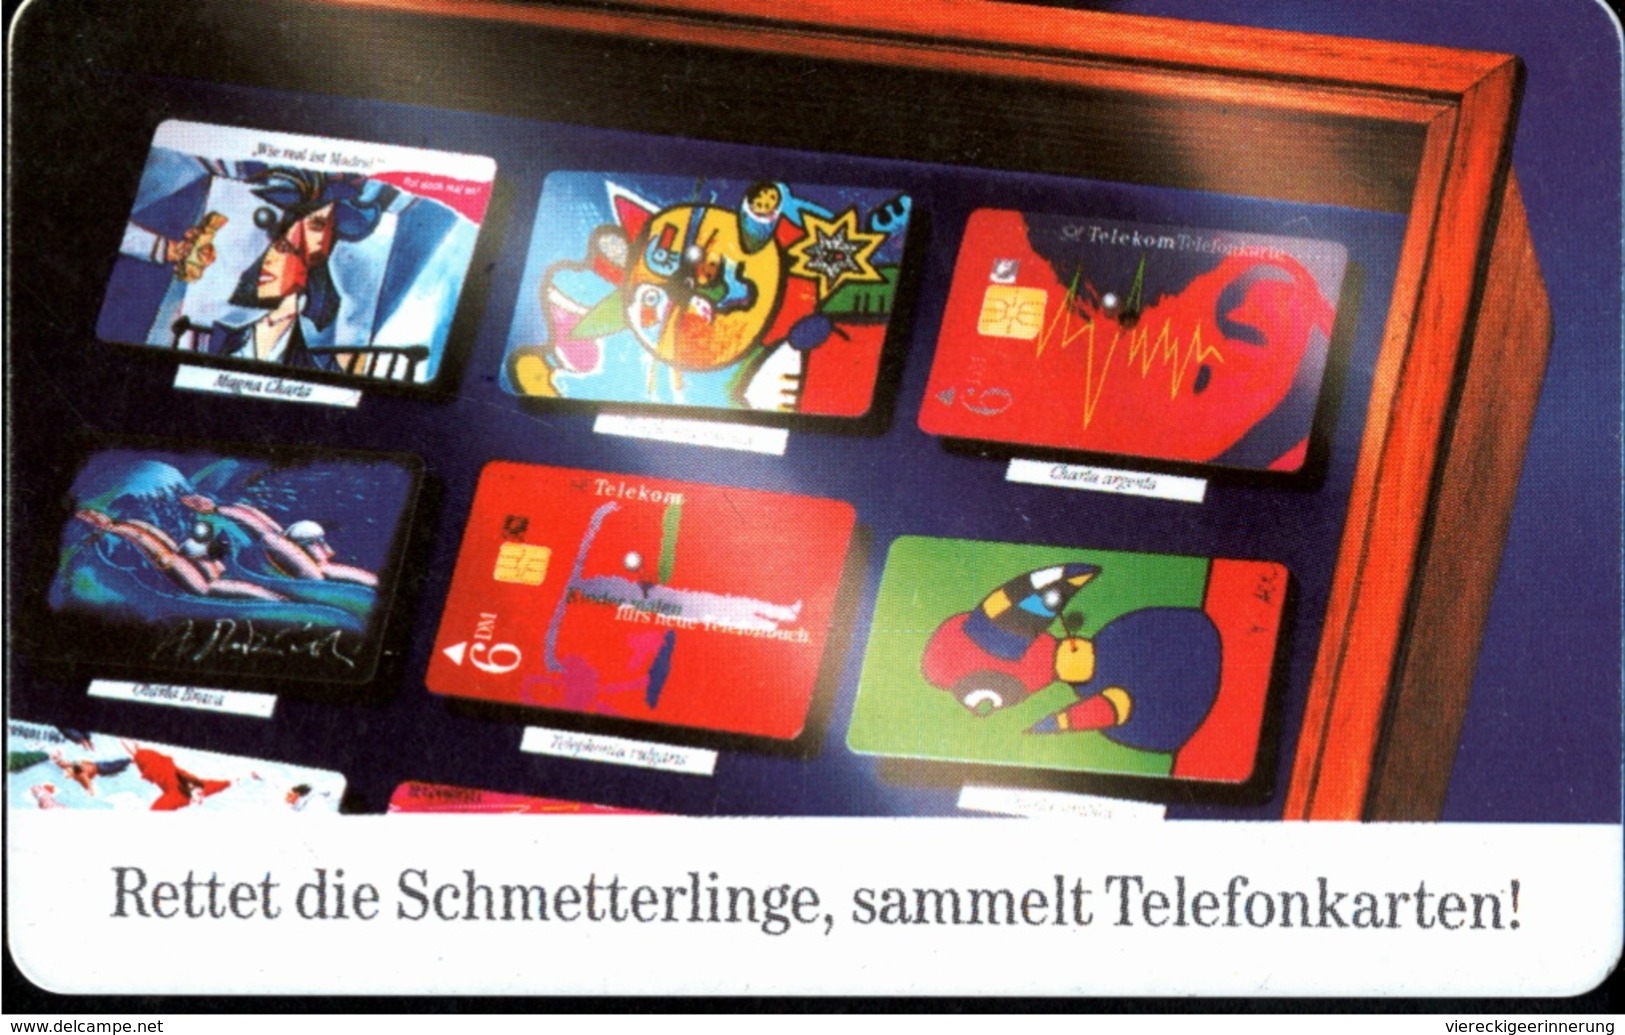 ! Telefonkarte, Telecarte, Phonecard, 1996, S PD, Sammelt Telefonkarten, Schmetterlinge, Germany - P & PD-Series : D. Telekom Till